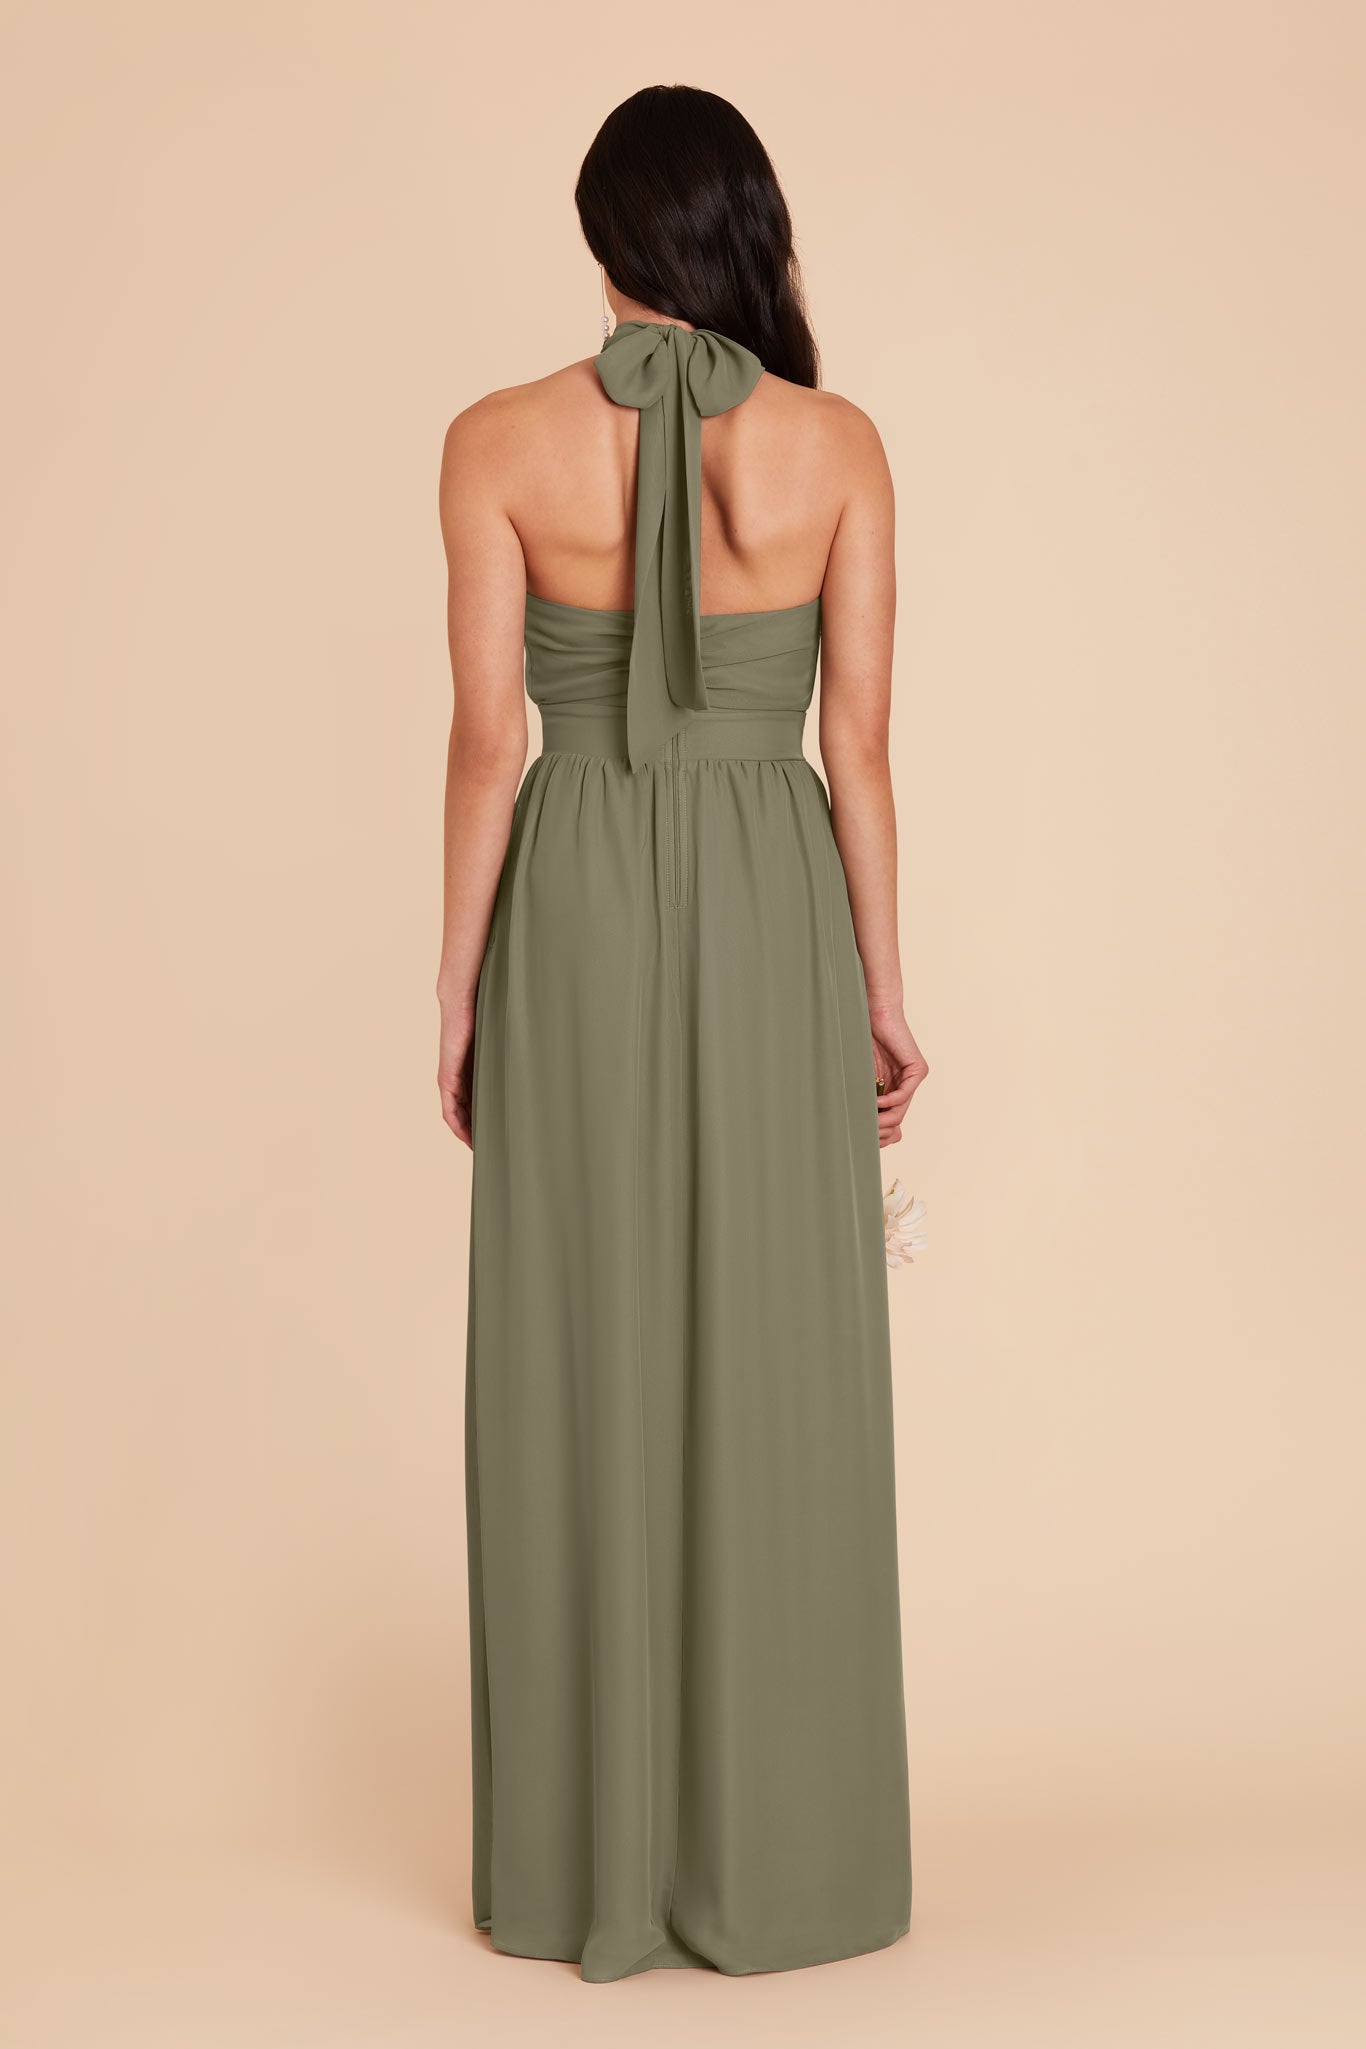 Moss Green Joyce Chiffon Dress by Birdy Grey